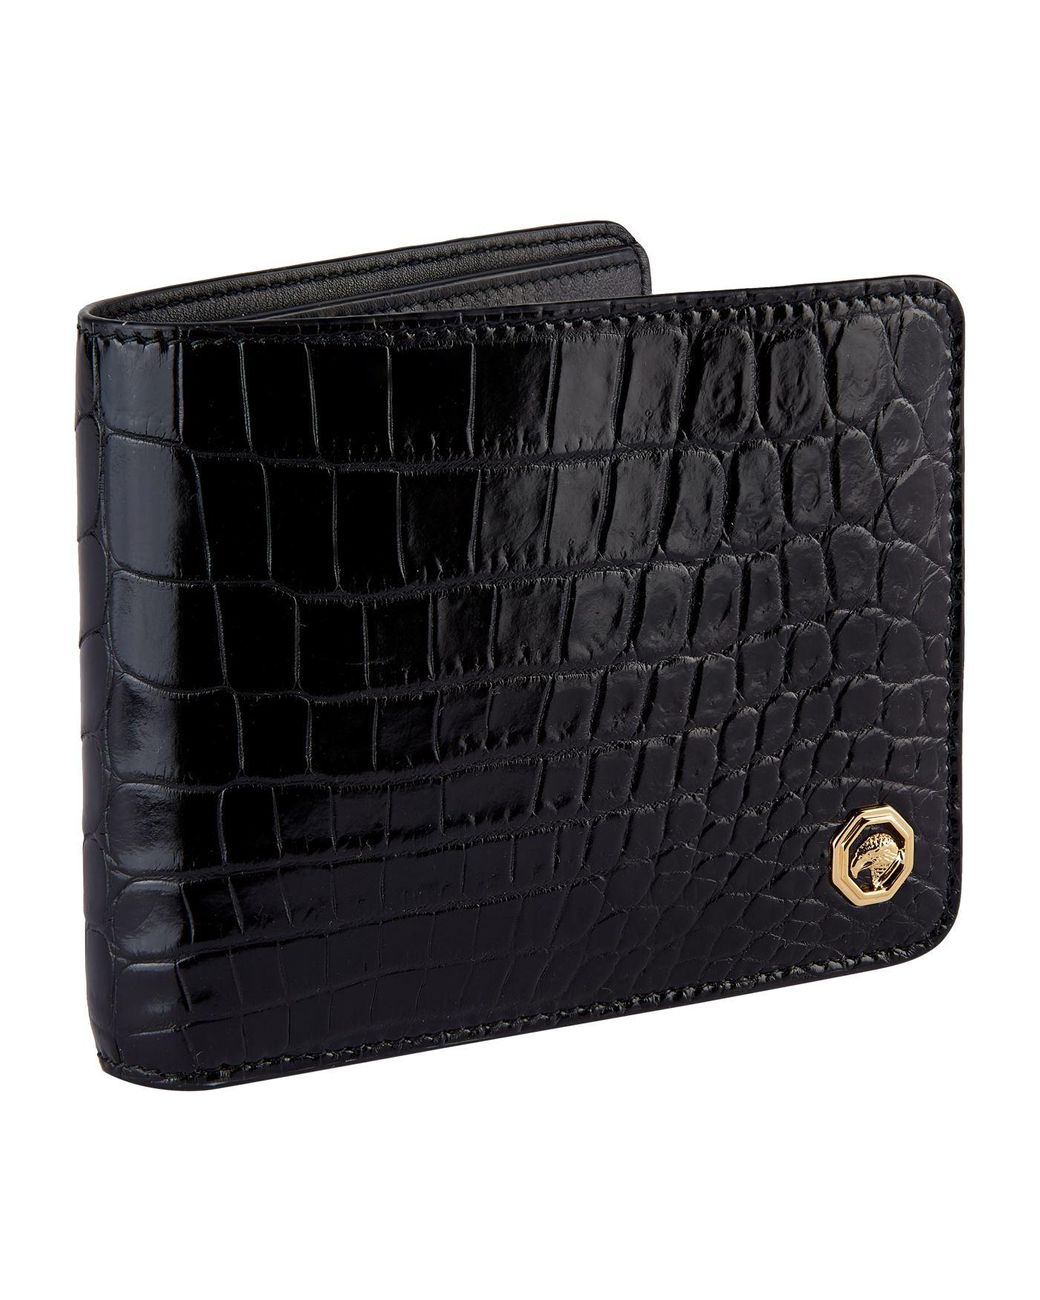 Stefano Ricci Eagle Crocodile Leather Wallet in Black for Men | Lyst